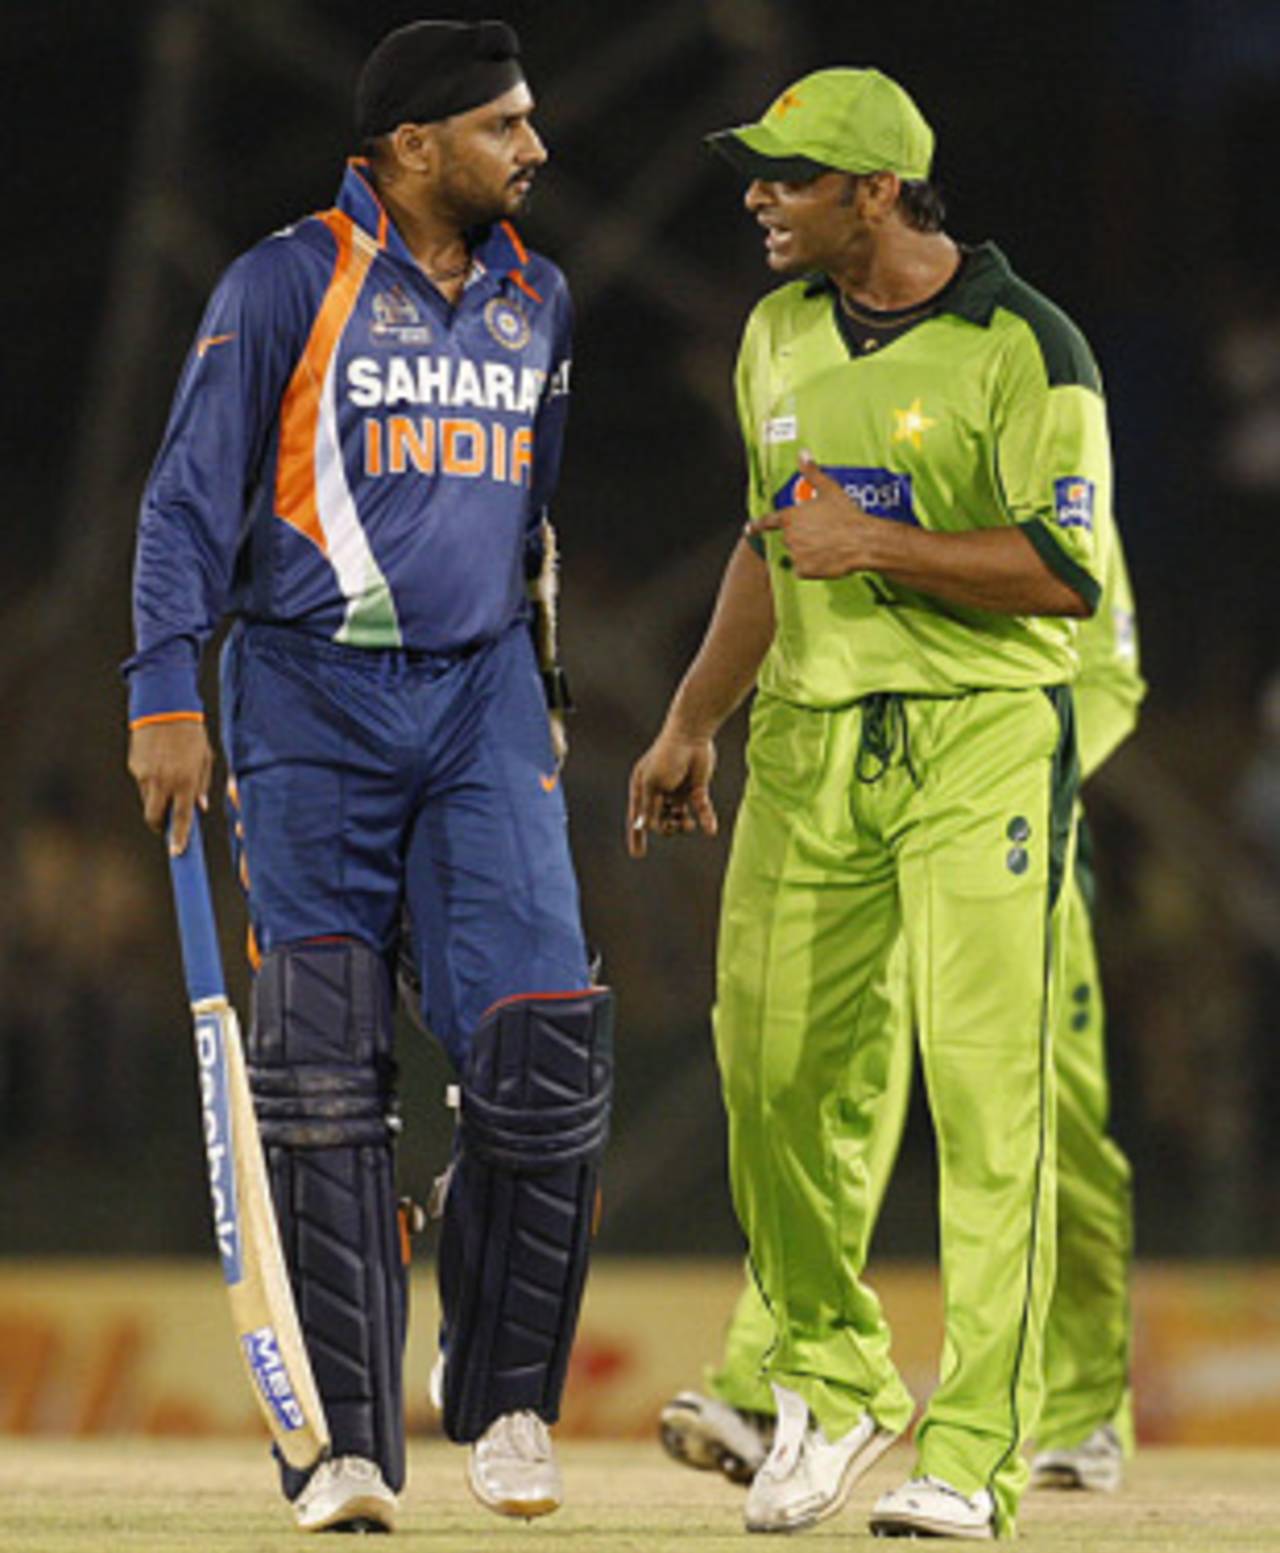 Harbhajan Singh and Shoaib Akhtar turn on the heat, India v Pakistan, 4th ODI, Asia Cup, Dambulla, June 19, 2010